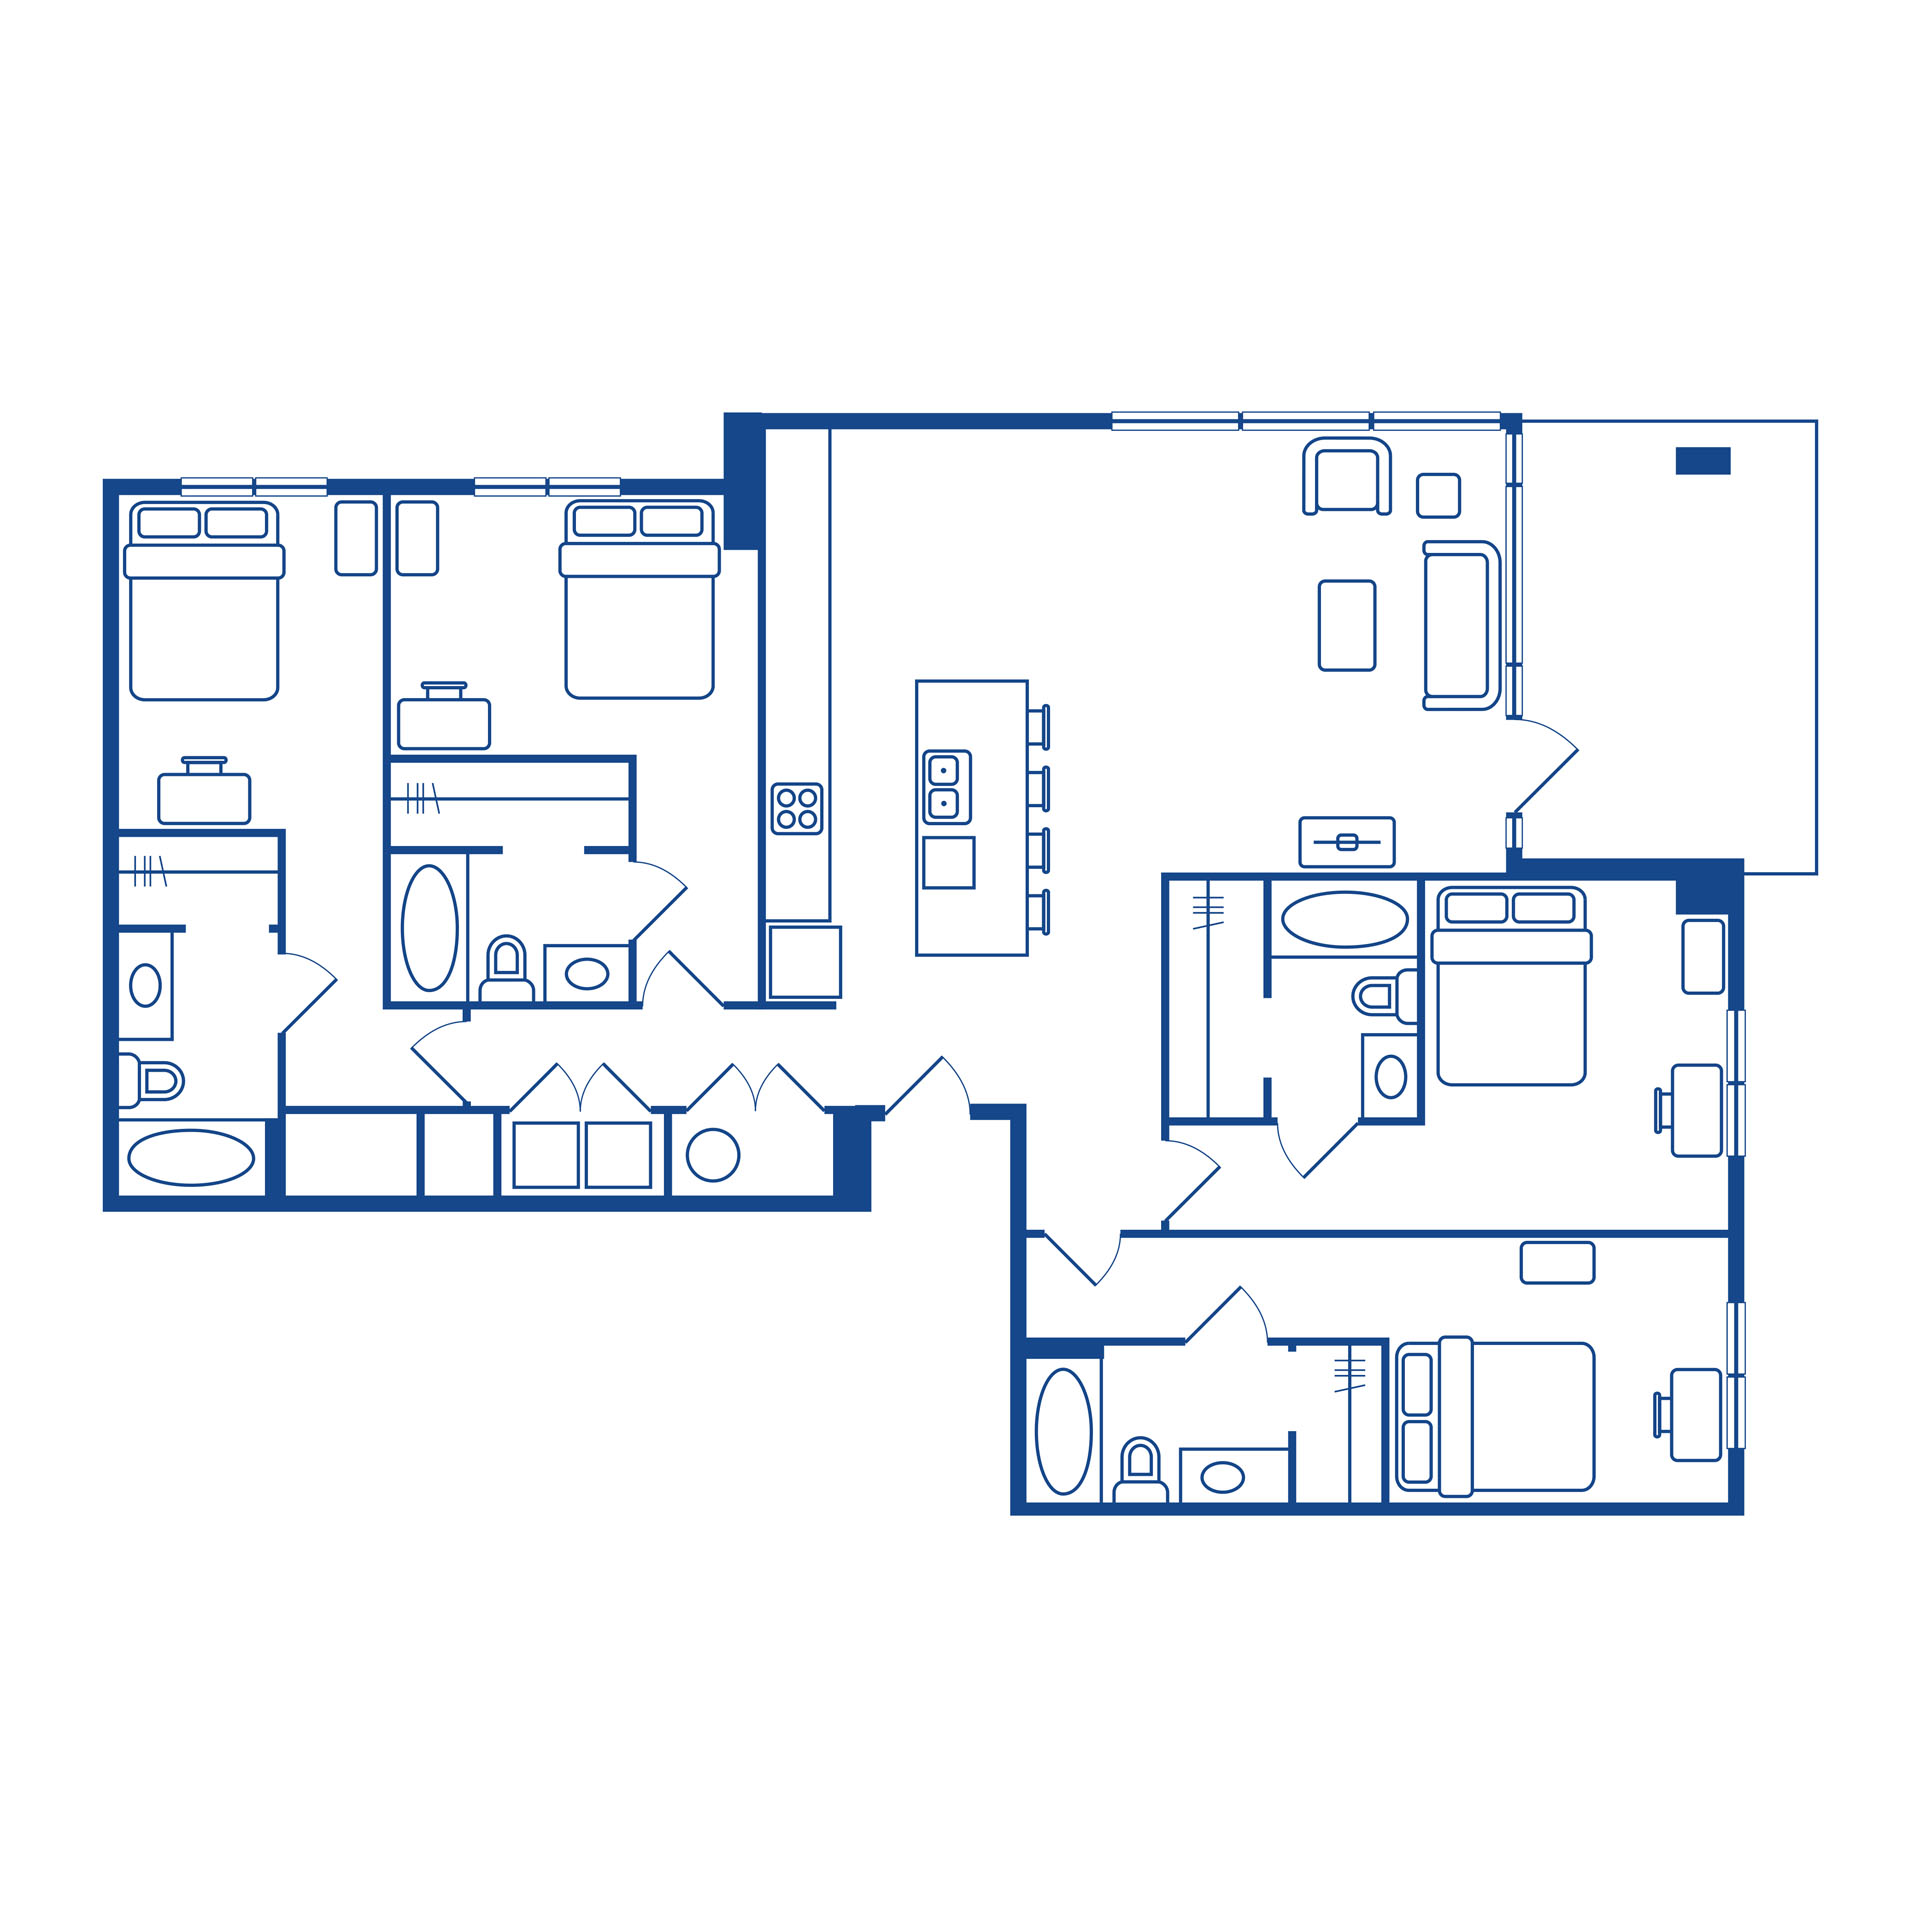 4 bedroom / 4 bath XL floor plan 